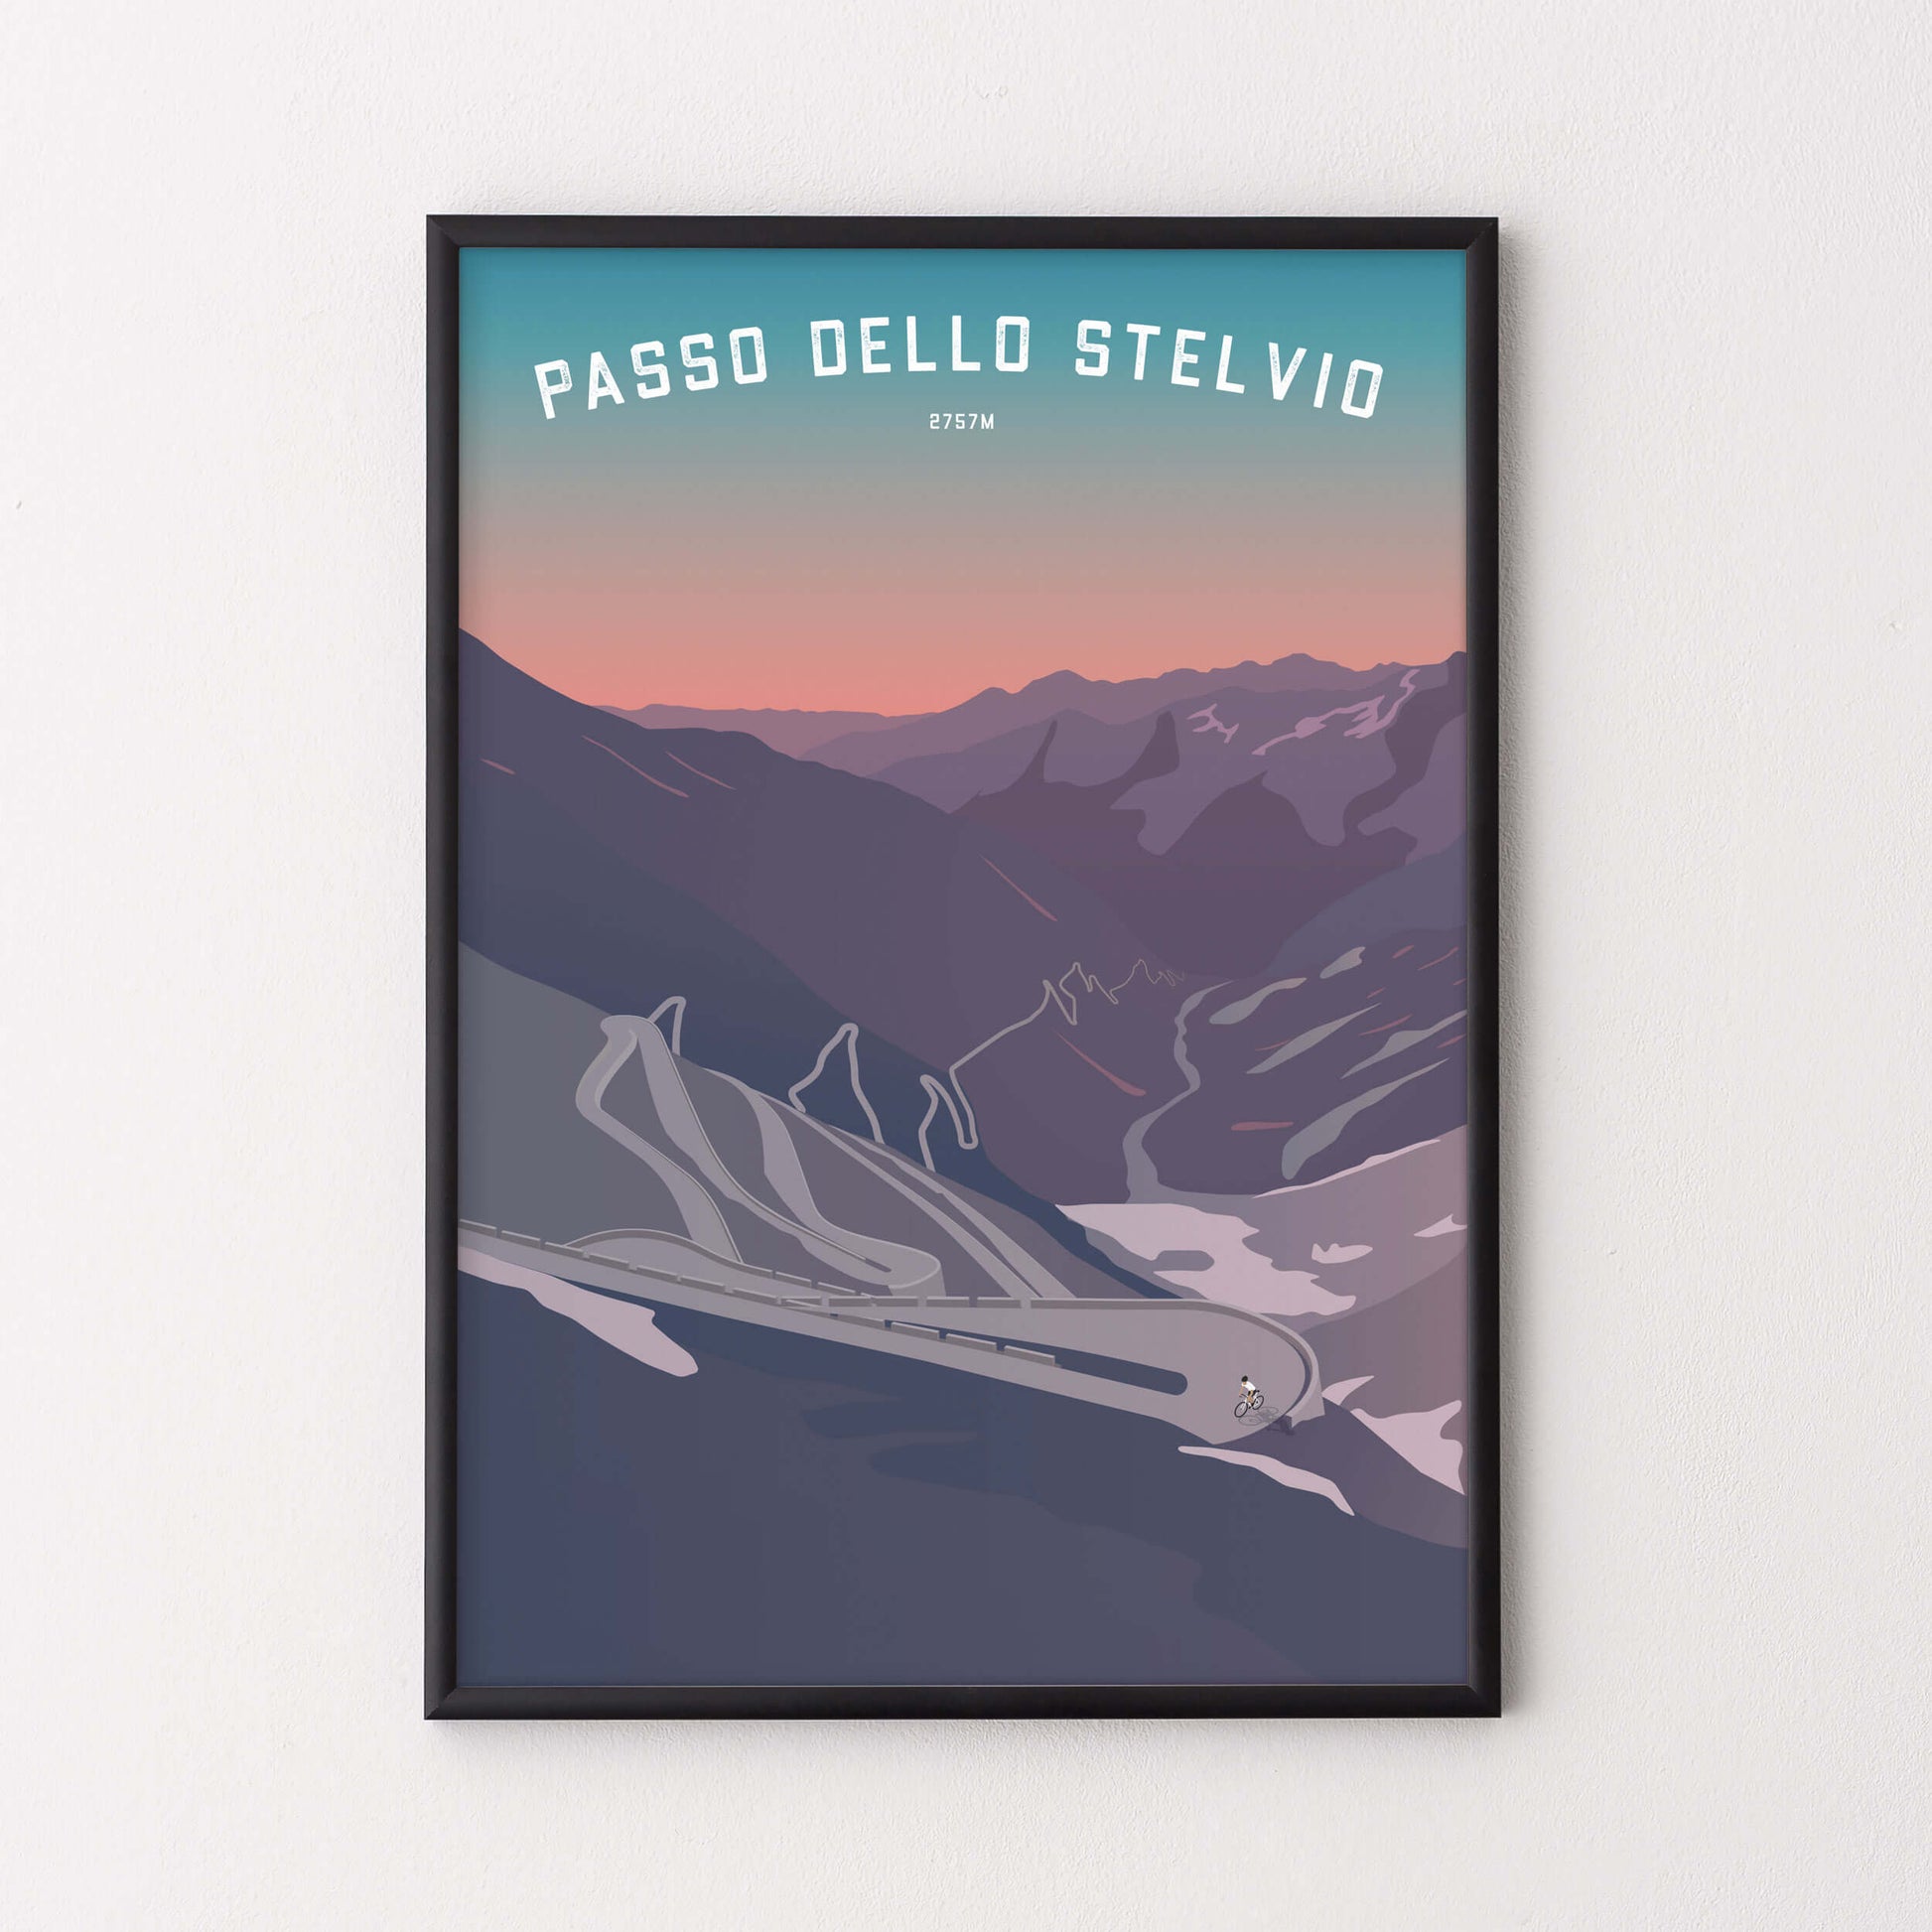 Stelvio Pass – Poster – The English Cyclist